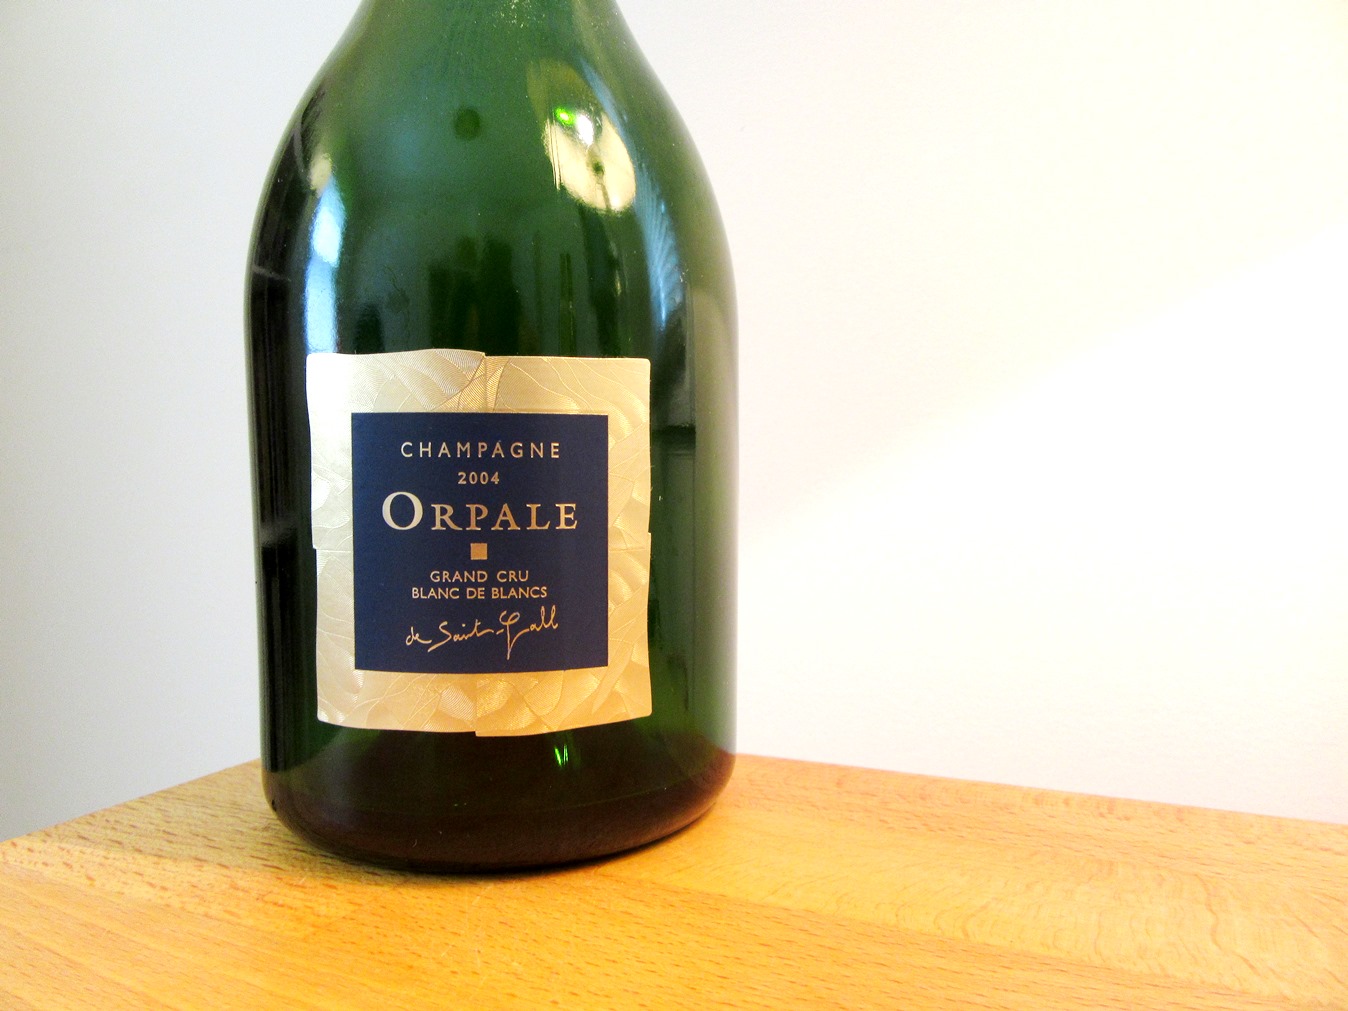 De Saint Gall, Orpale Blanc de Blancs Grand Cru Millesime Champagne 2004, France, Wine Casual